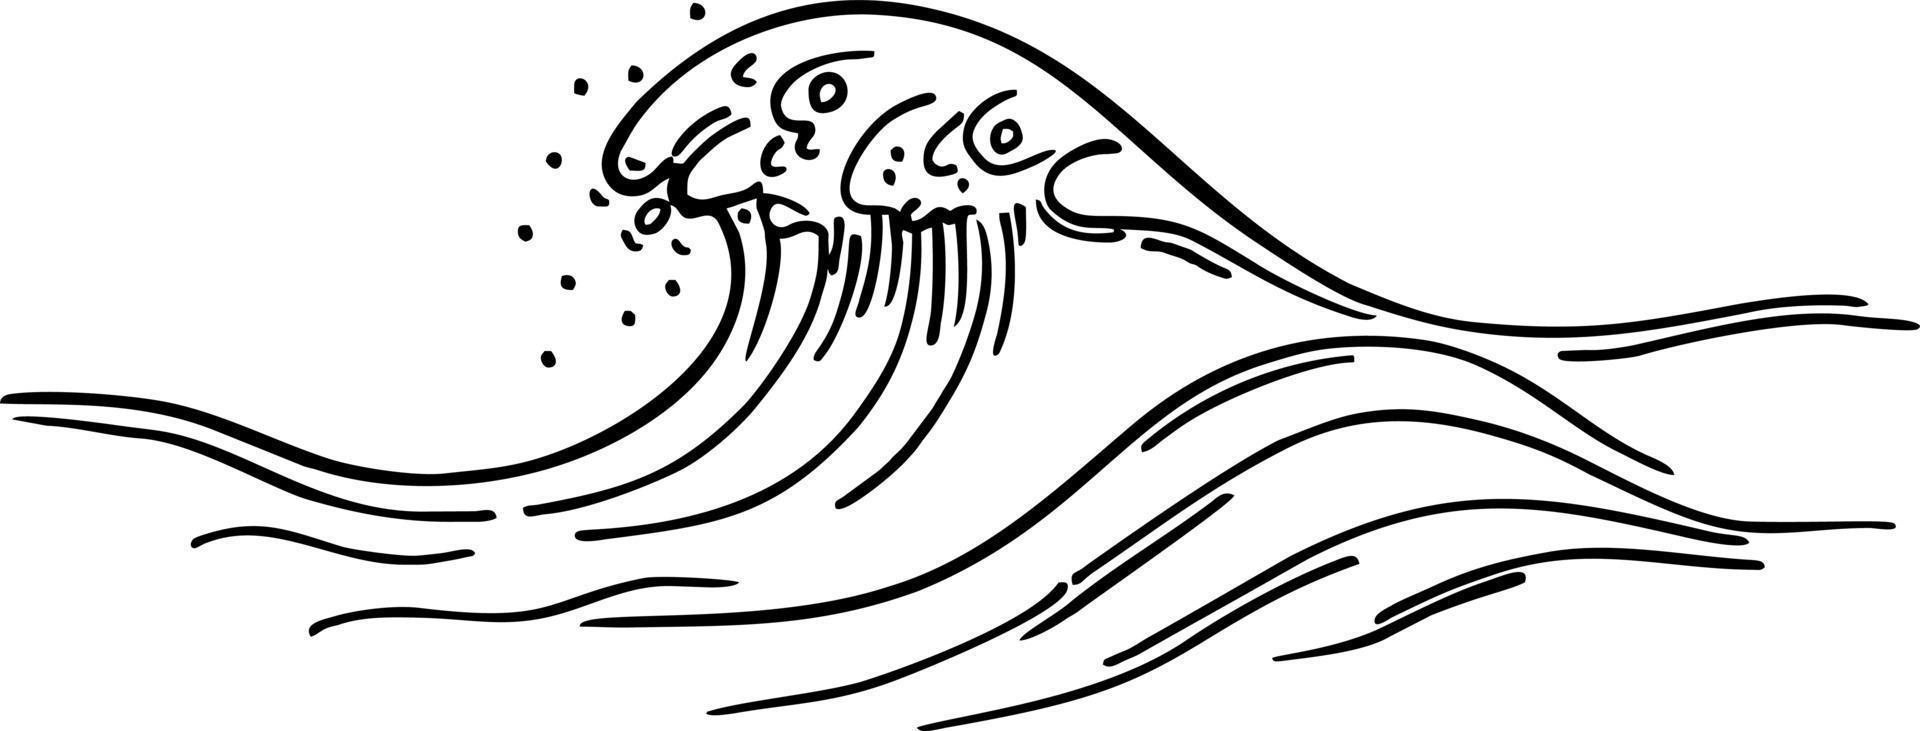 Outline of sea wave. Sea wave crest. Hand drawn sketch Linear monochrome vector illustration.